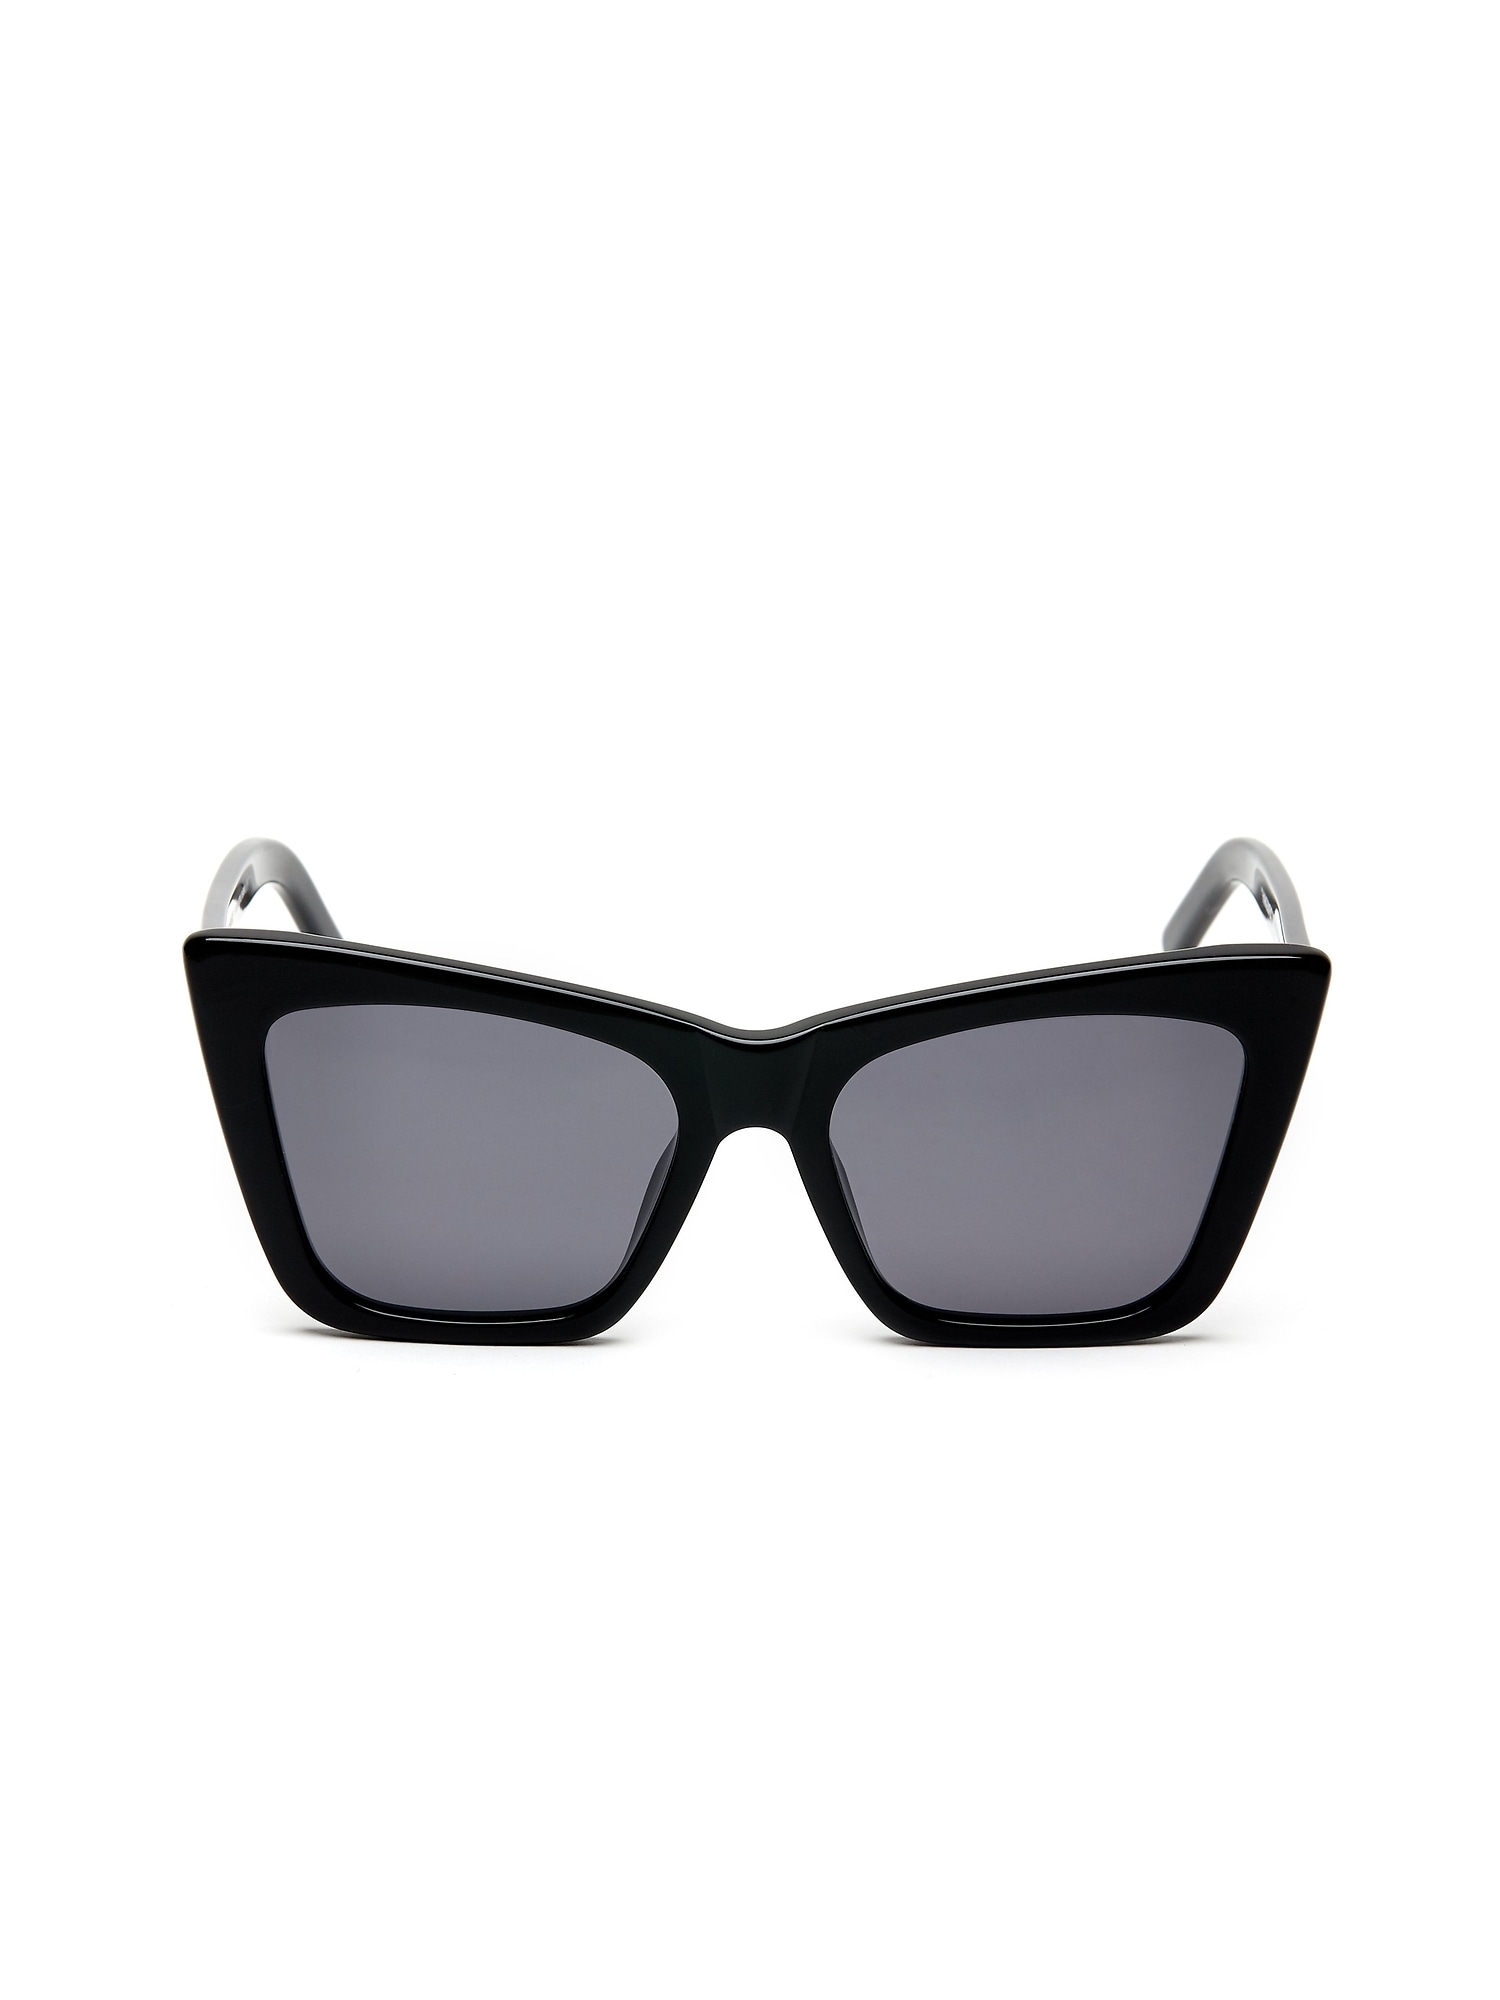 Gap Cateye Oversized Sunglasses